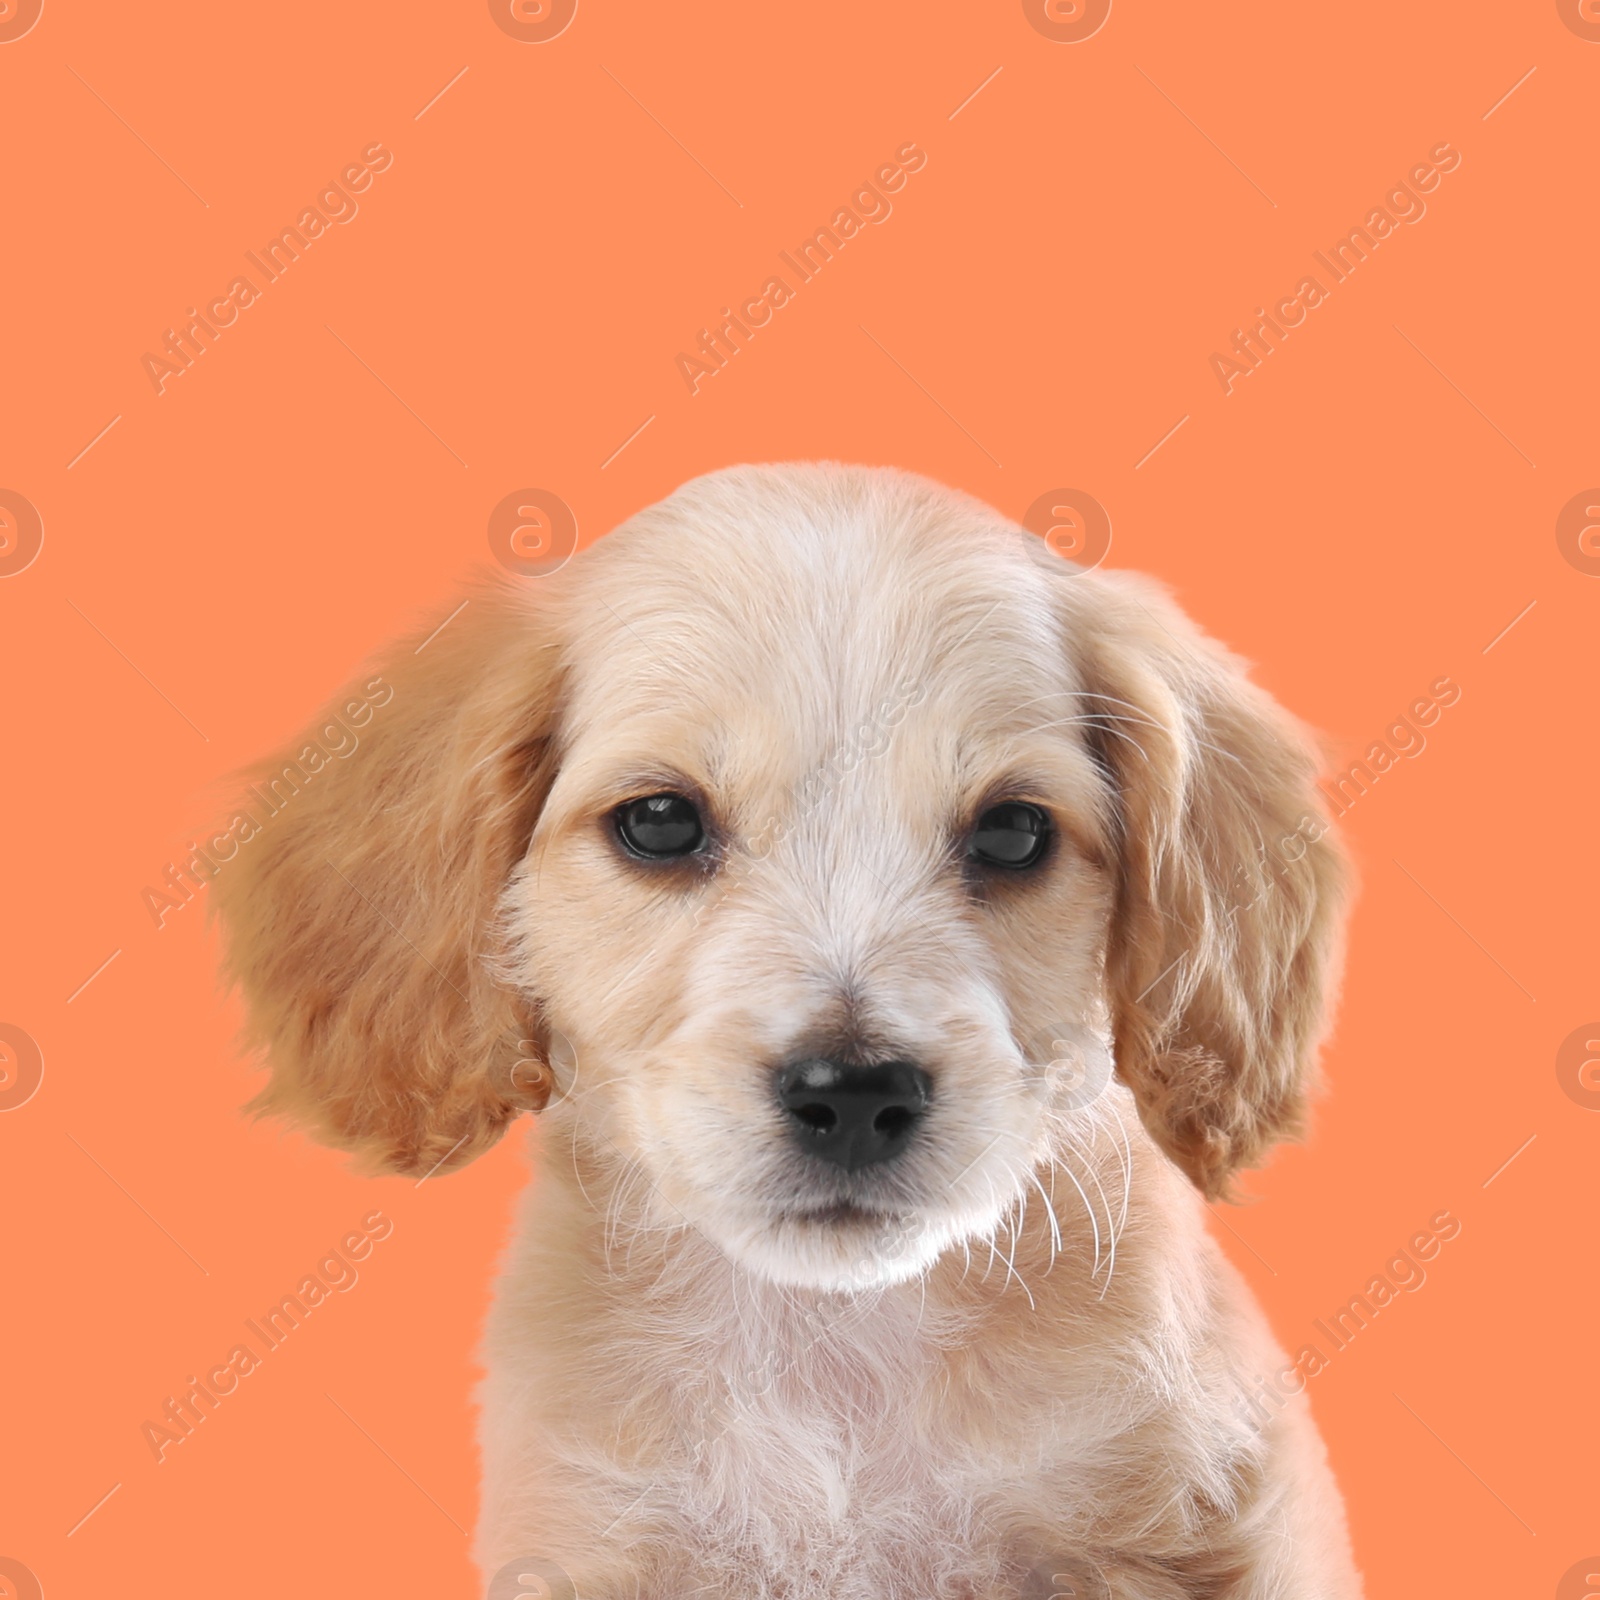 Image of Cute English Cocker Spaniel puppy on pale orange background